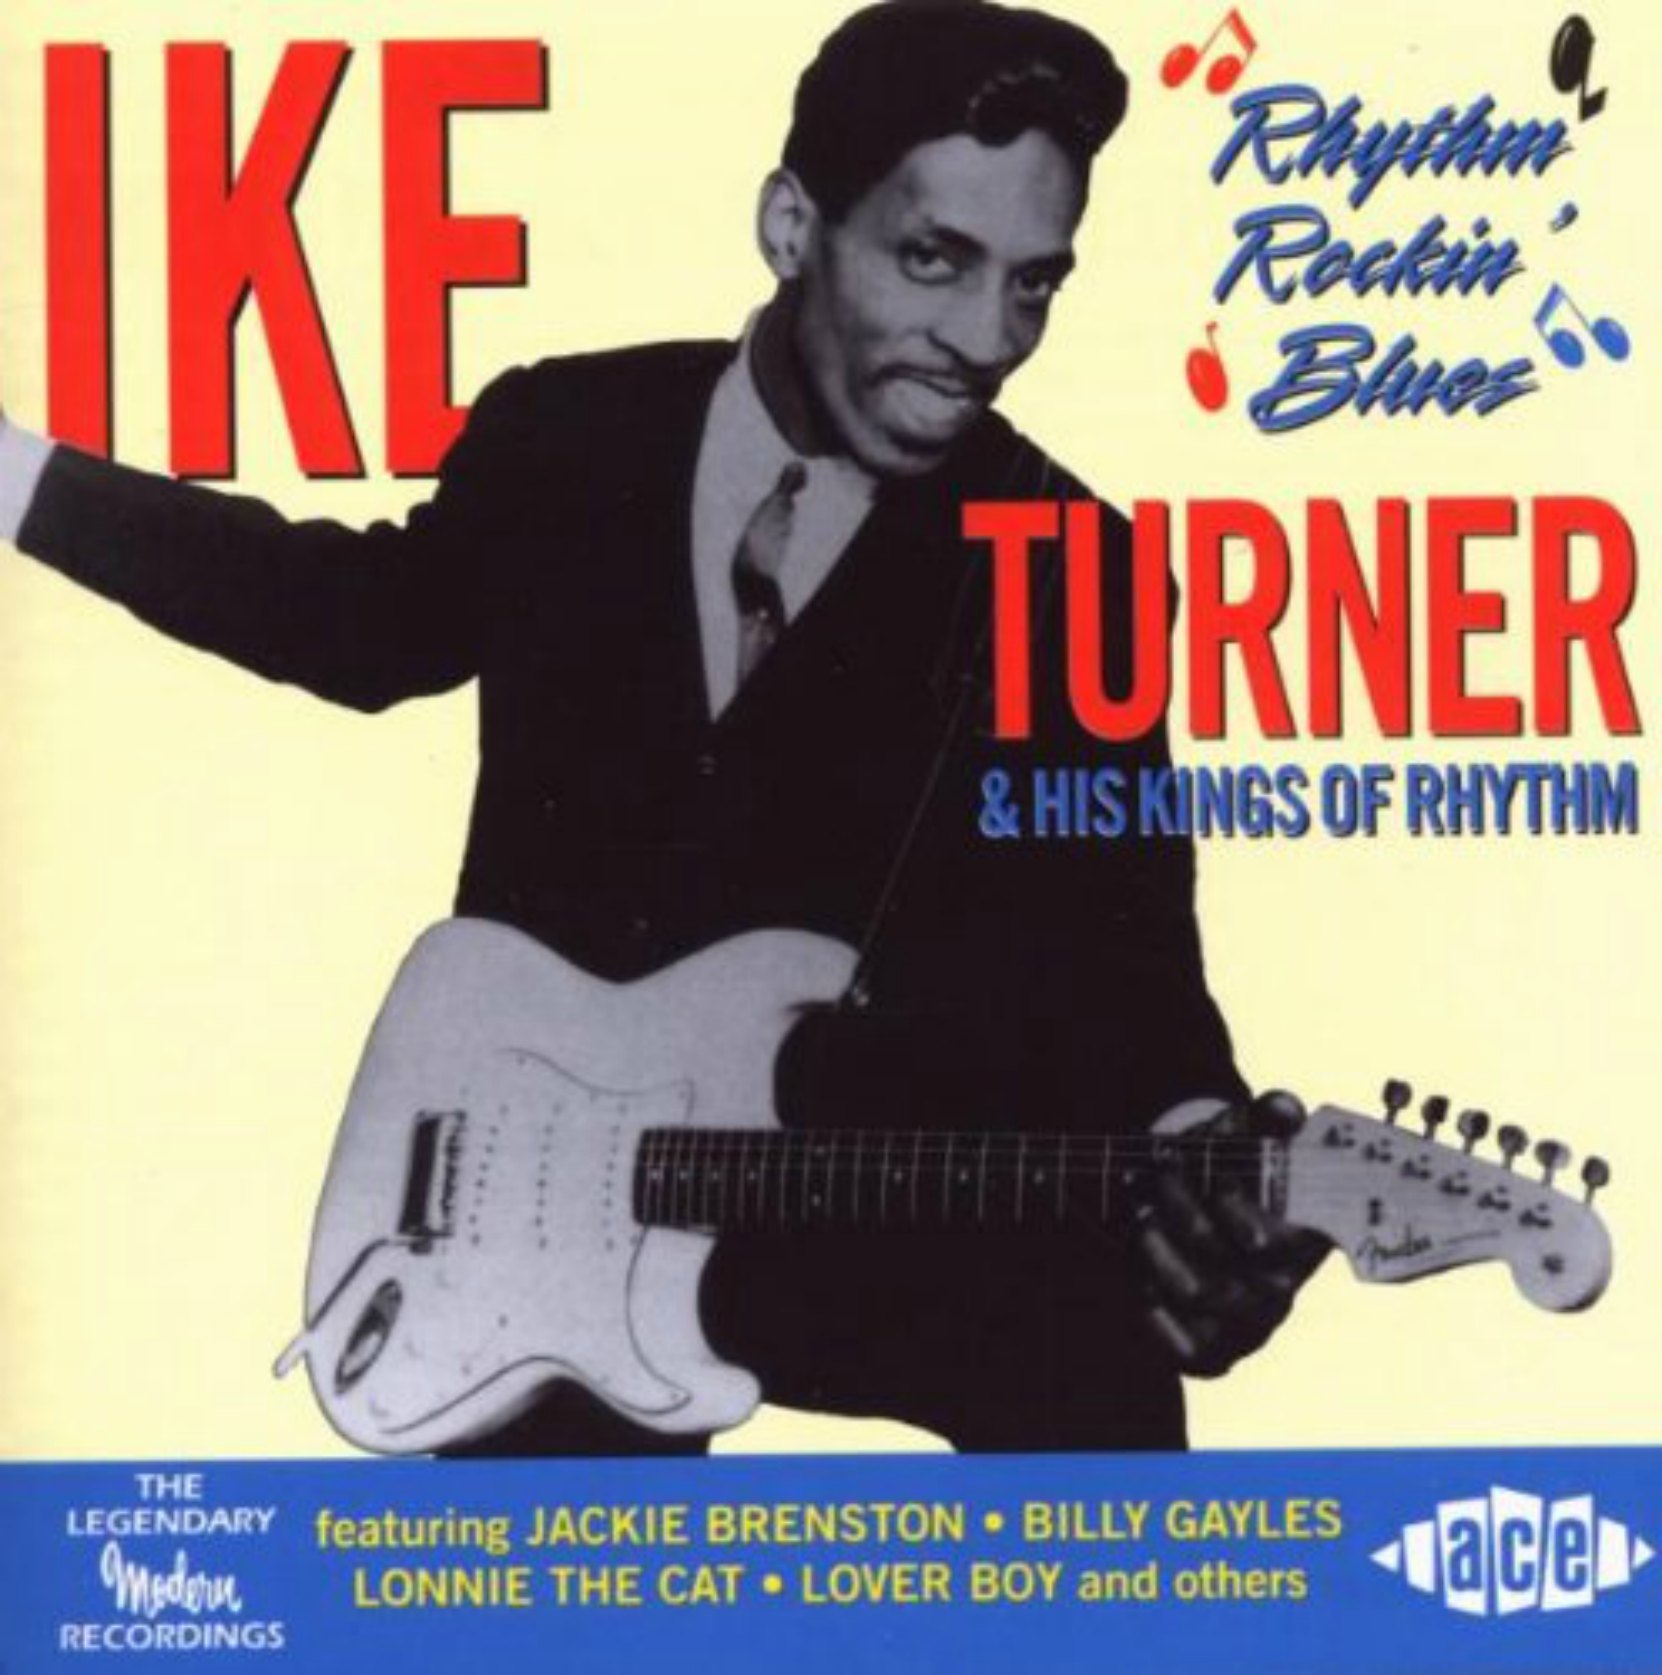 CD cover, Ike Turner & His Kings of Rhythm - Rhythm Rockin' Blues - on Ace Records